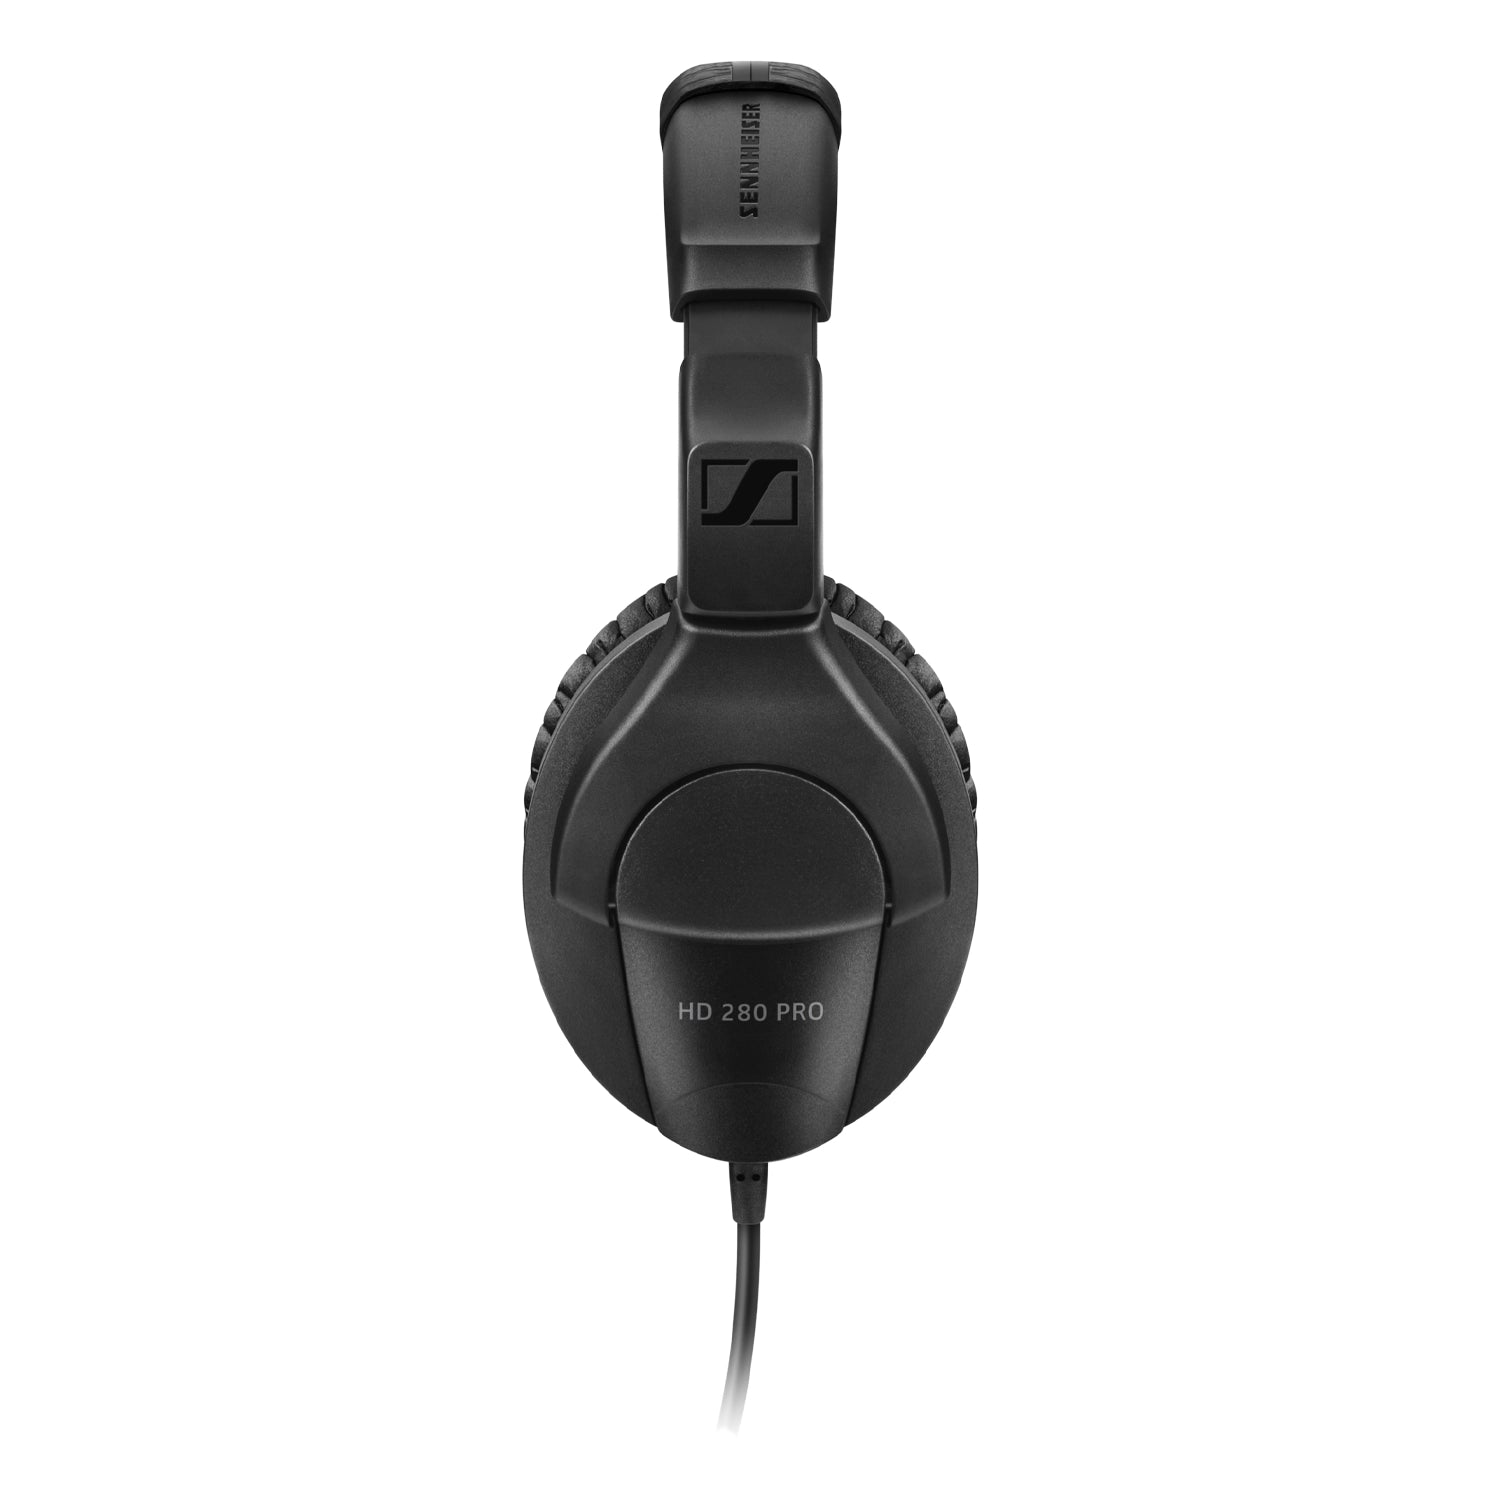 Sennheiser HD 280 Pro Circumaural Closed-Back Monitor Headphones